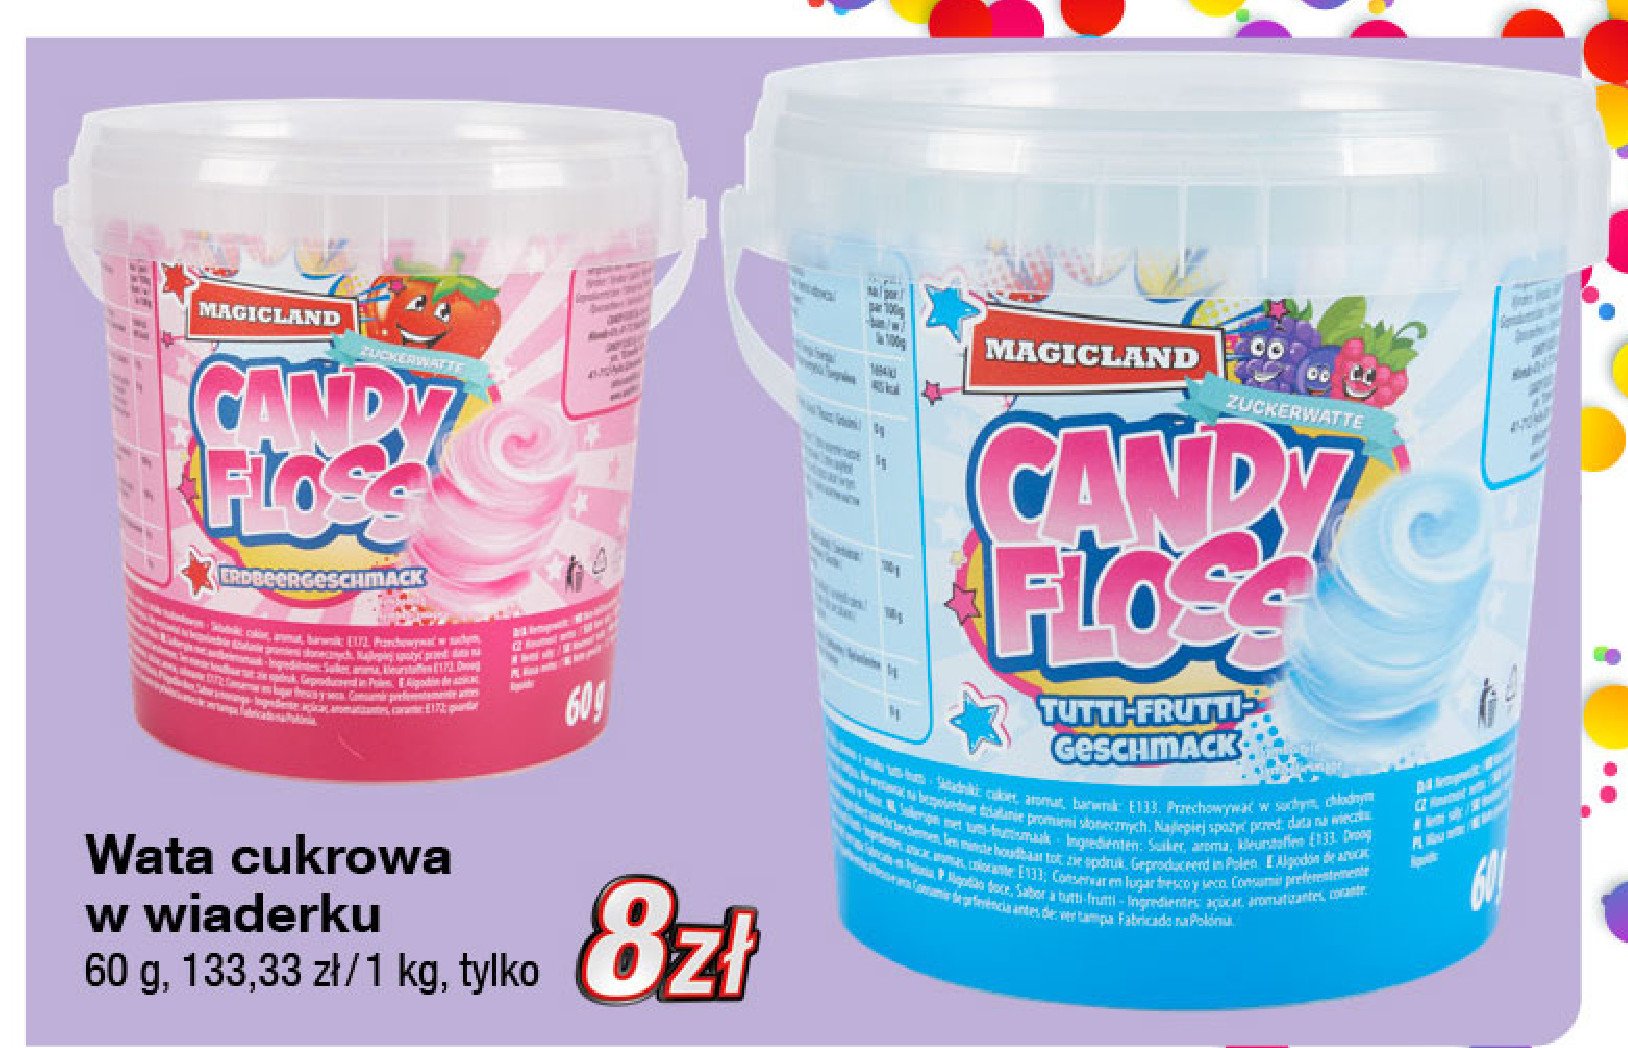 Wata cukrowa truskawka Candy floss promocja